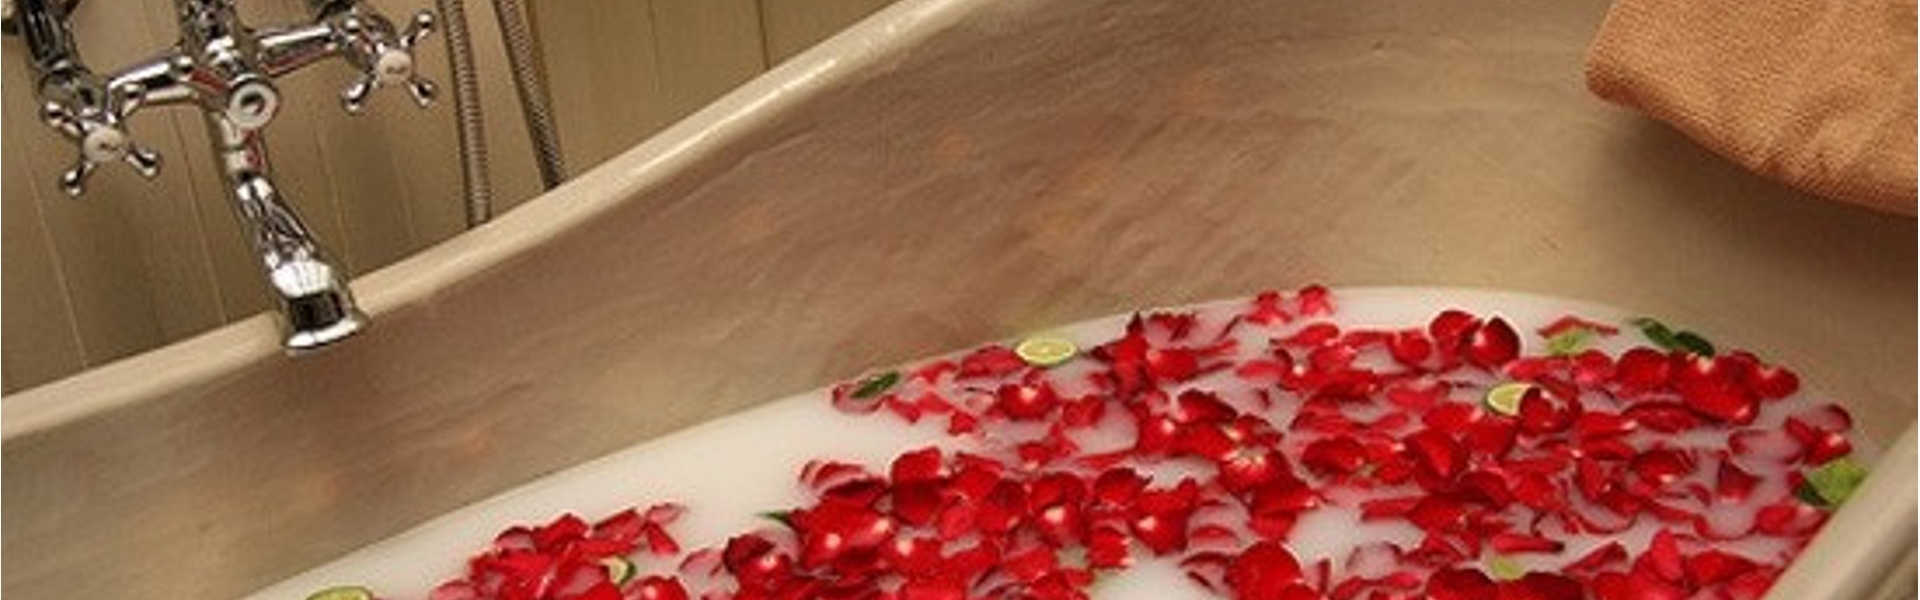 Bath Soap Flowers